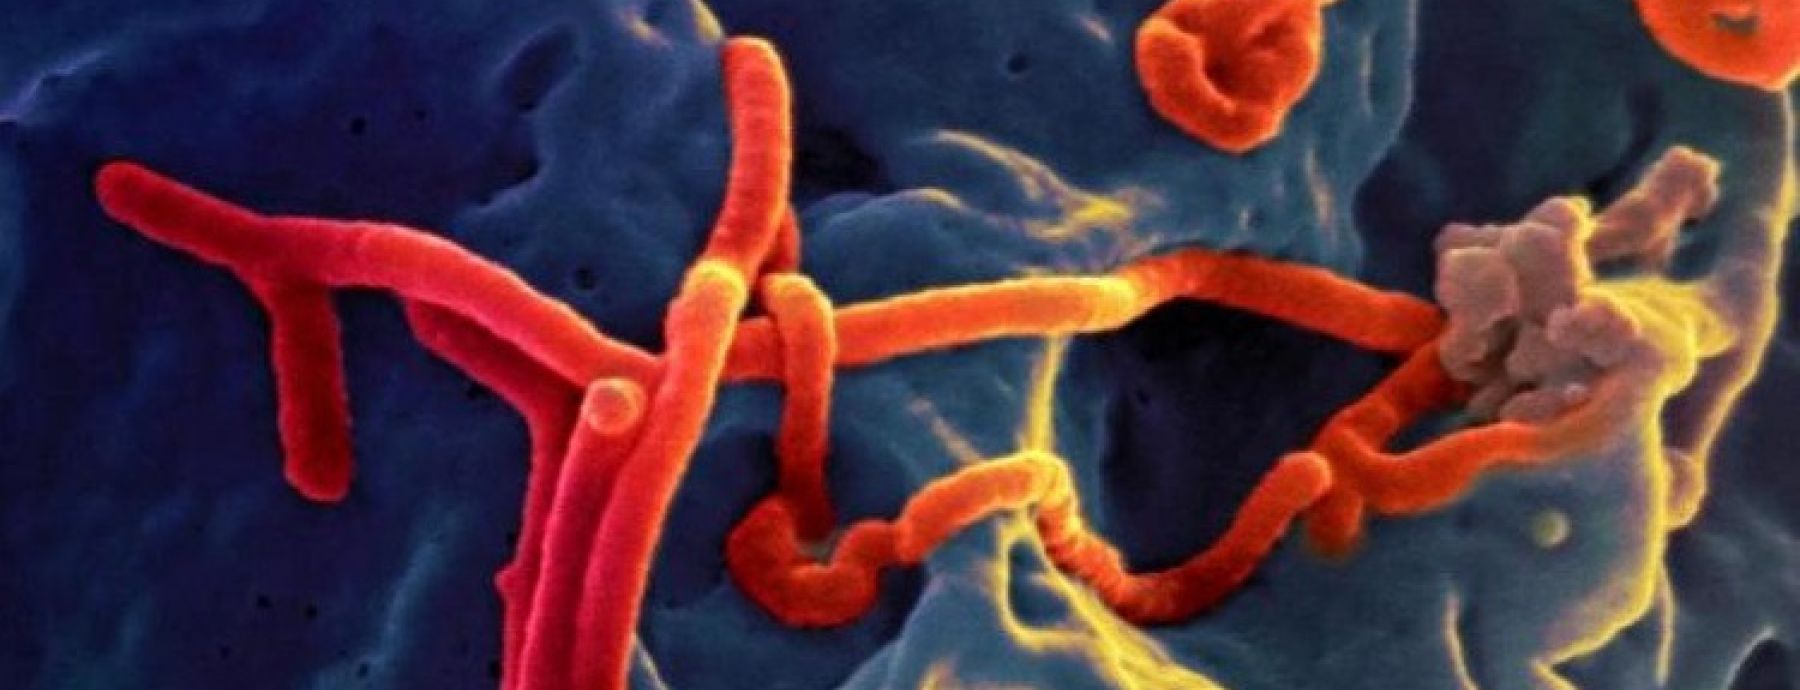 Predicting outcomes of the Ebola epidemic in Liberia